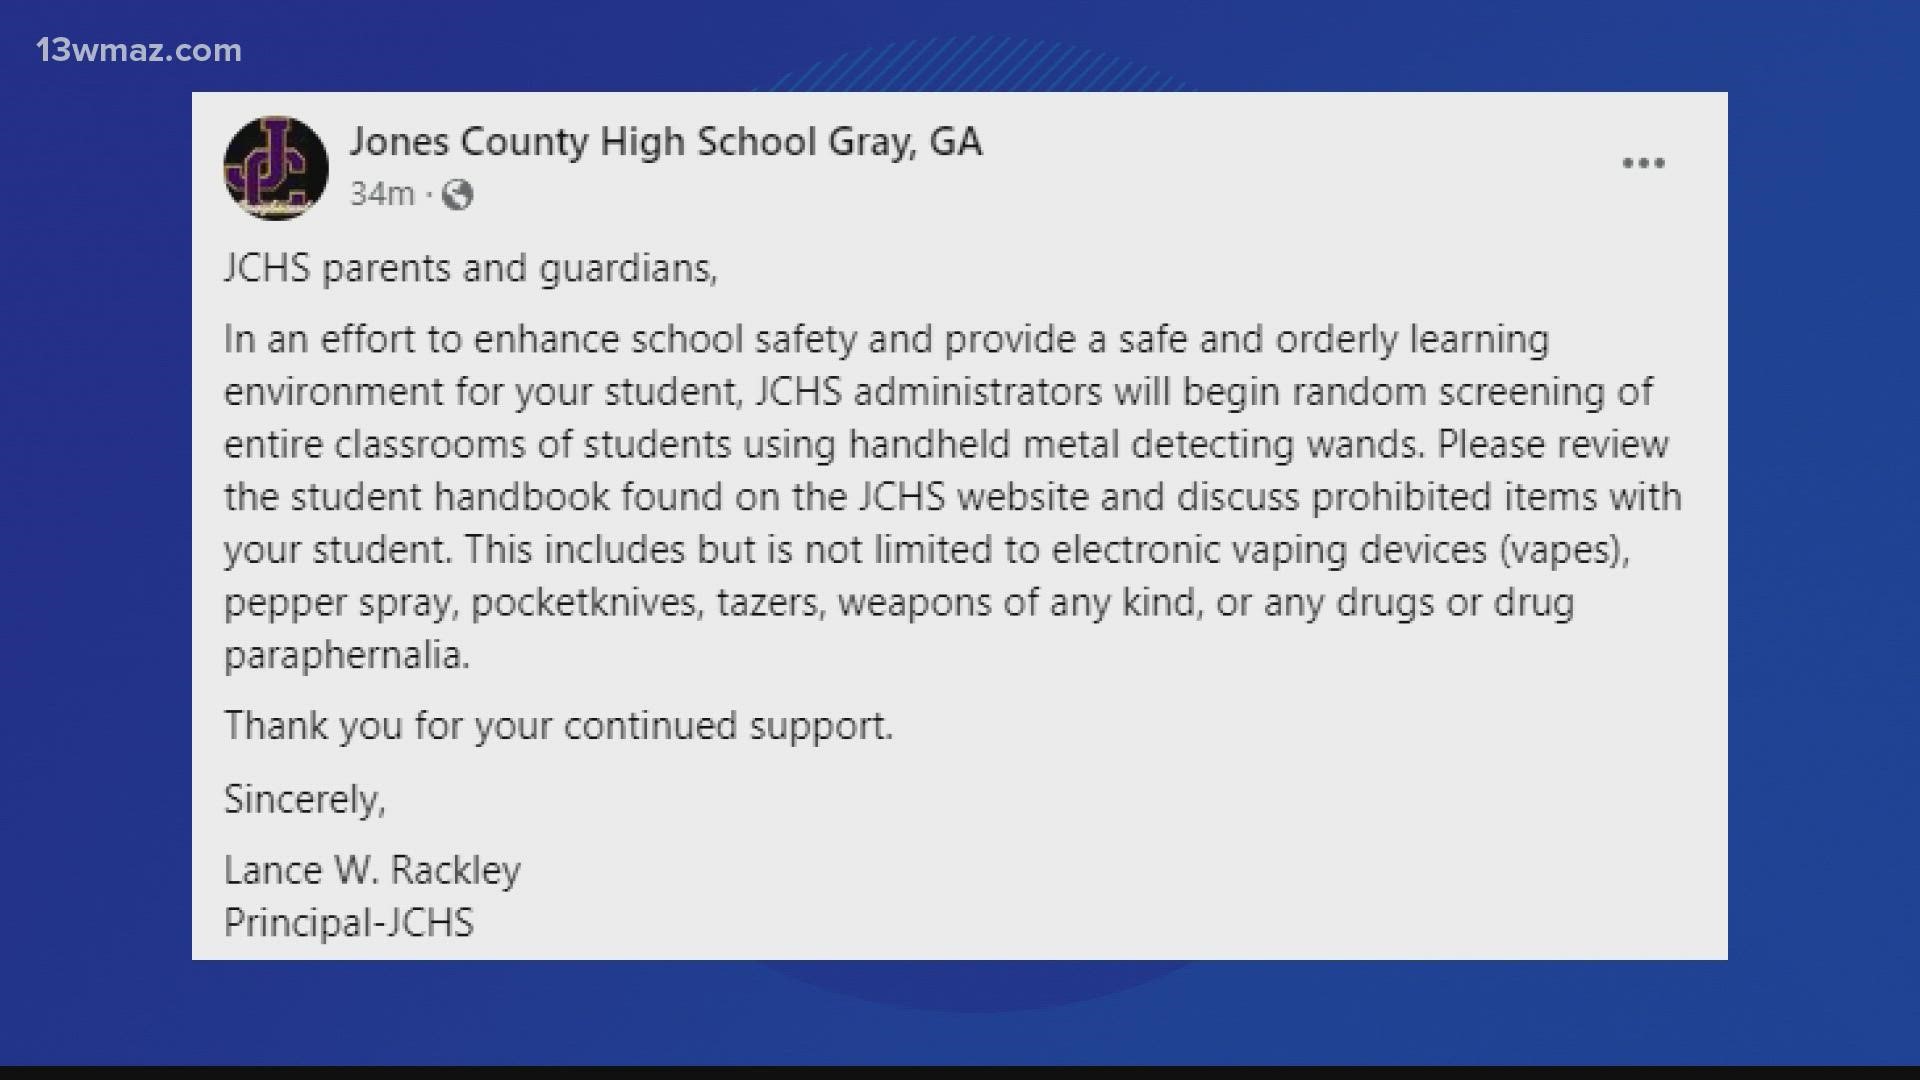 The school says administrators will start randomly screening classrooms with handheld metal detectors